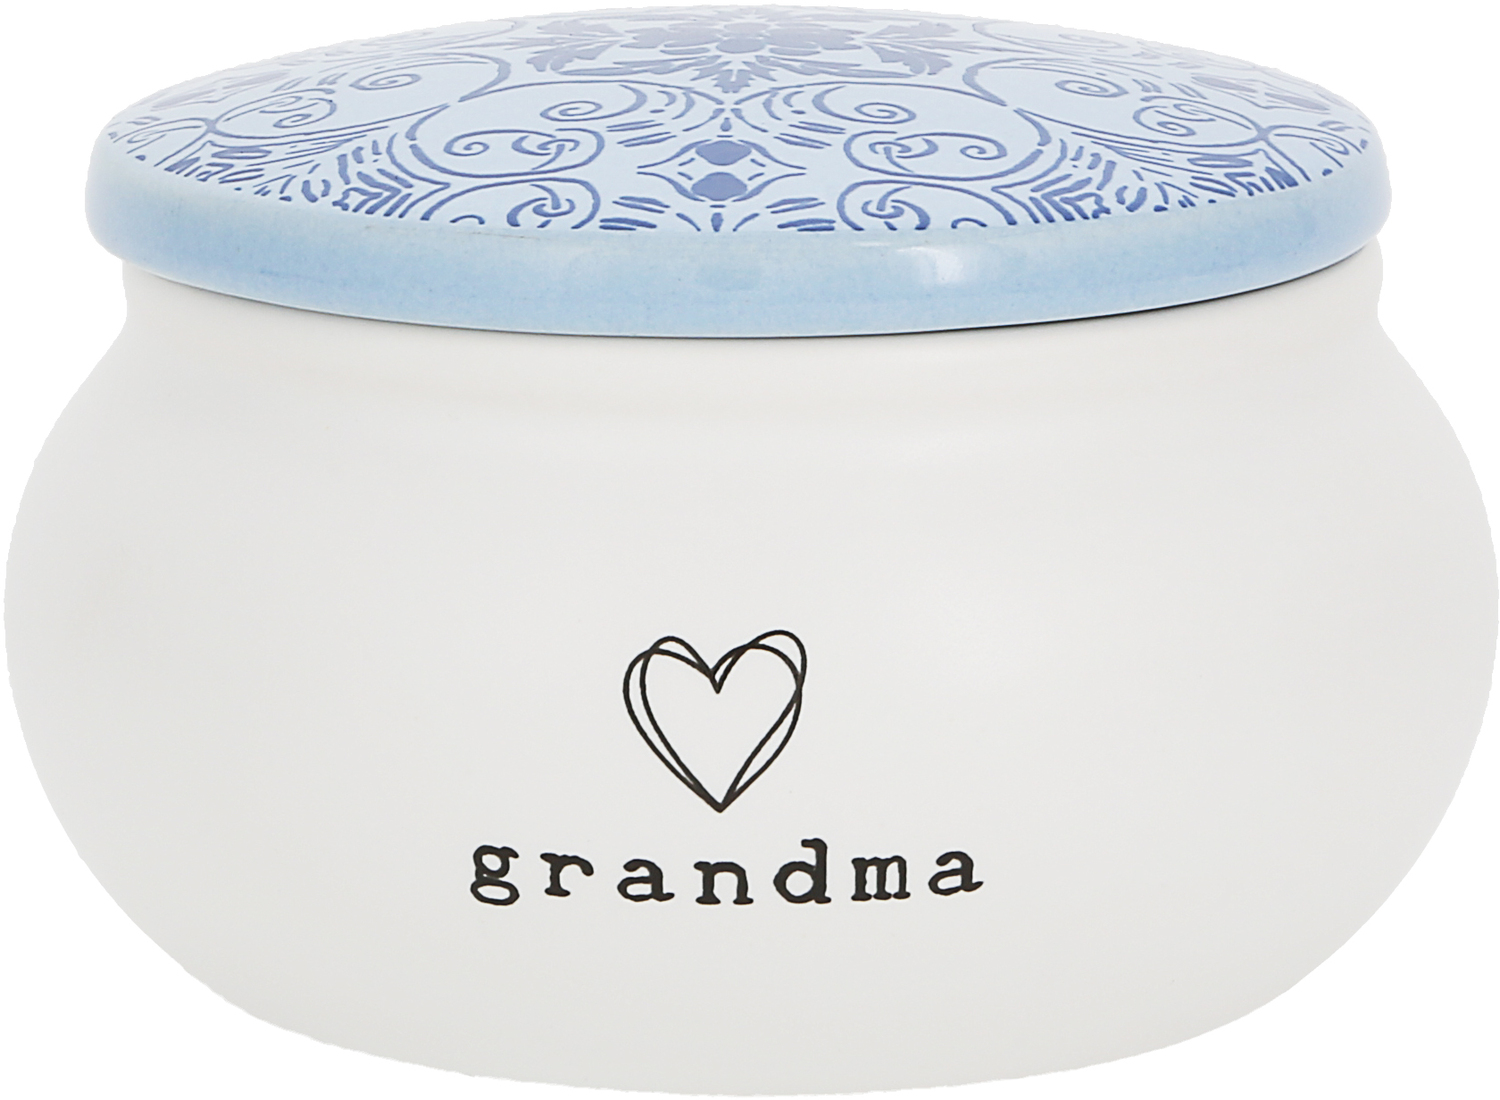 Grandma by You Make Me Smile -ALW - Grandma - 3.5" Ceramic Keepsake Box